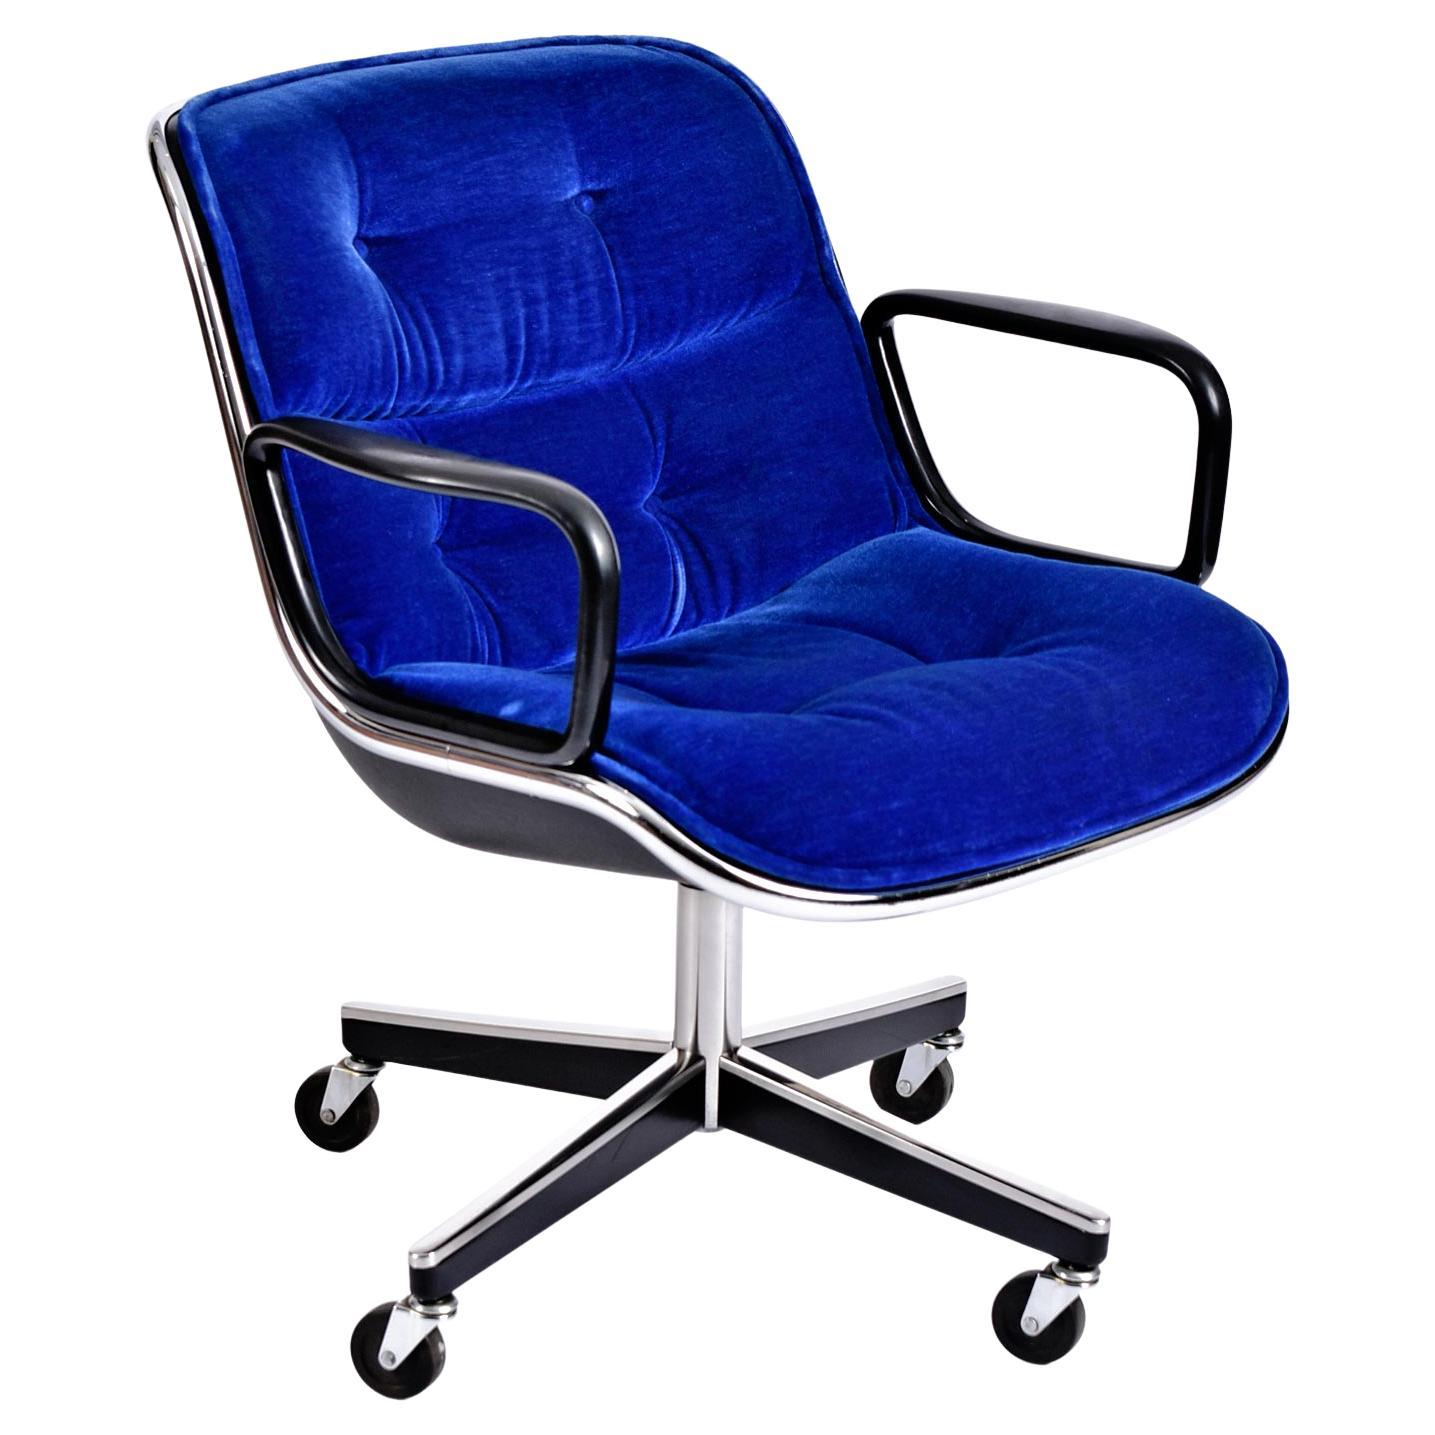 Executive Chair aus blauem Samt Charles Pollock für Knoll mit hohem Tension-Knopf